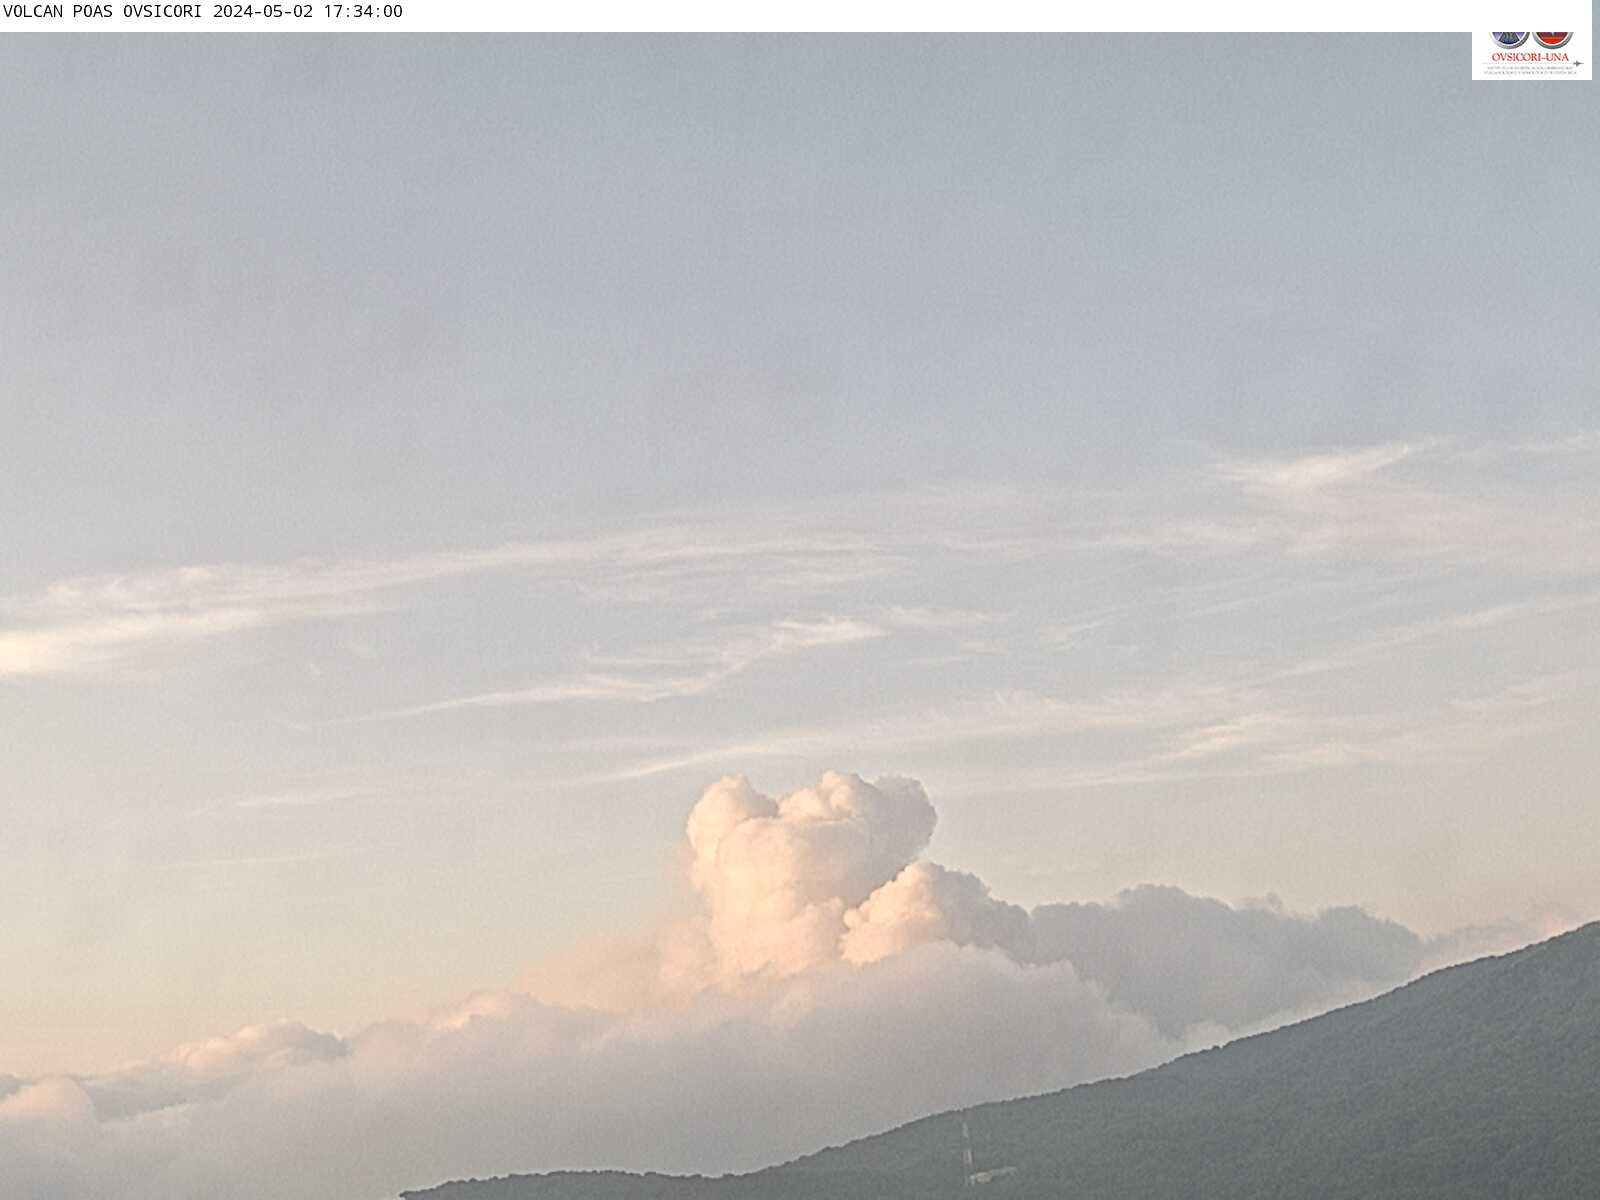 Volcán Poás en Vivo. Cámara Web del OVSICORI